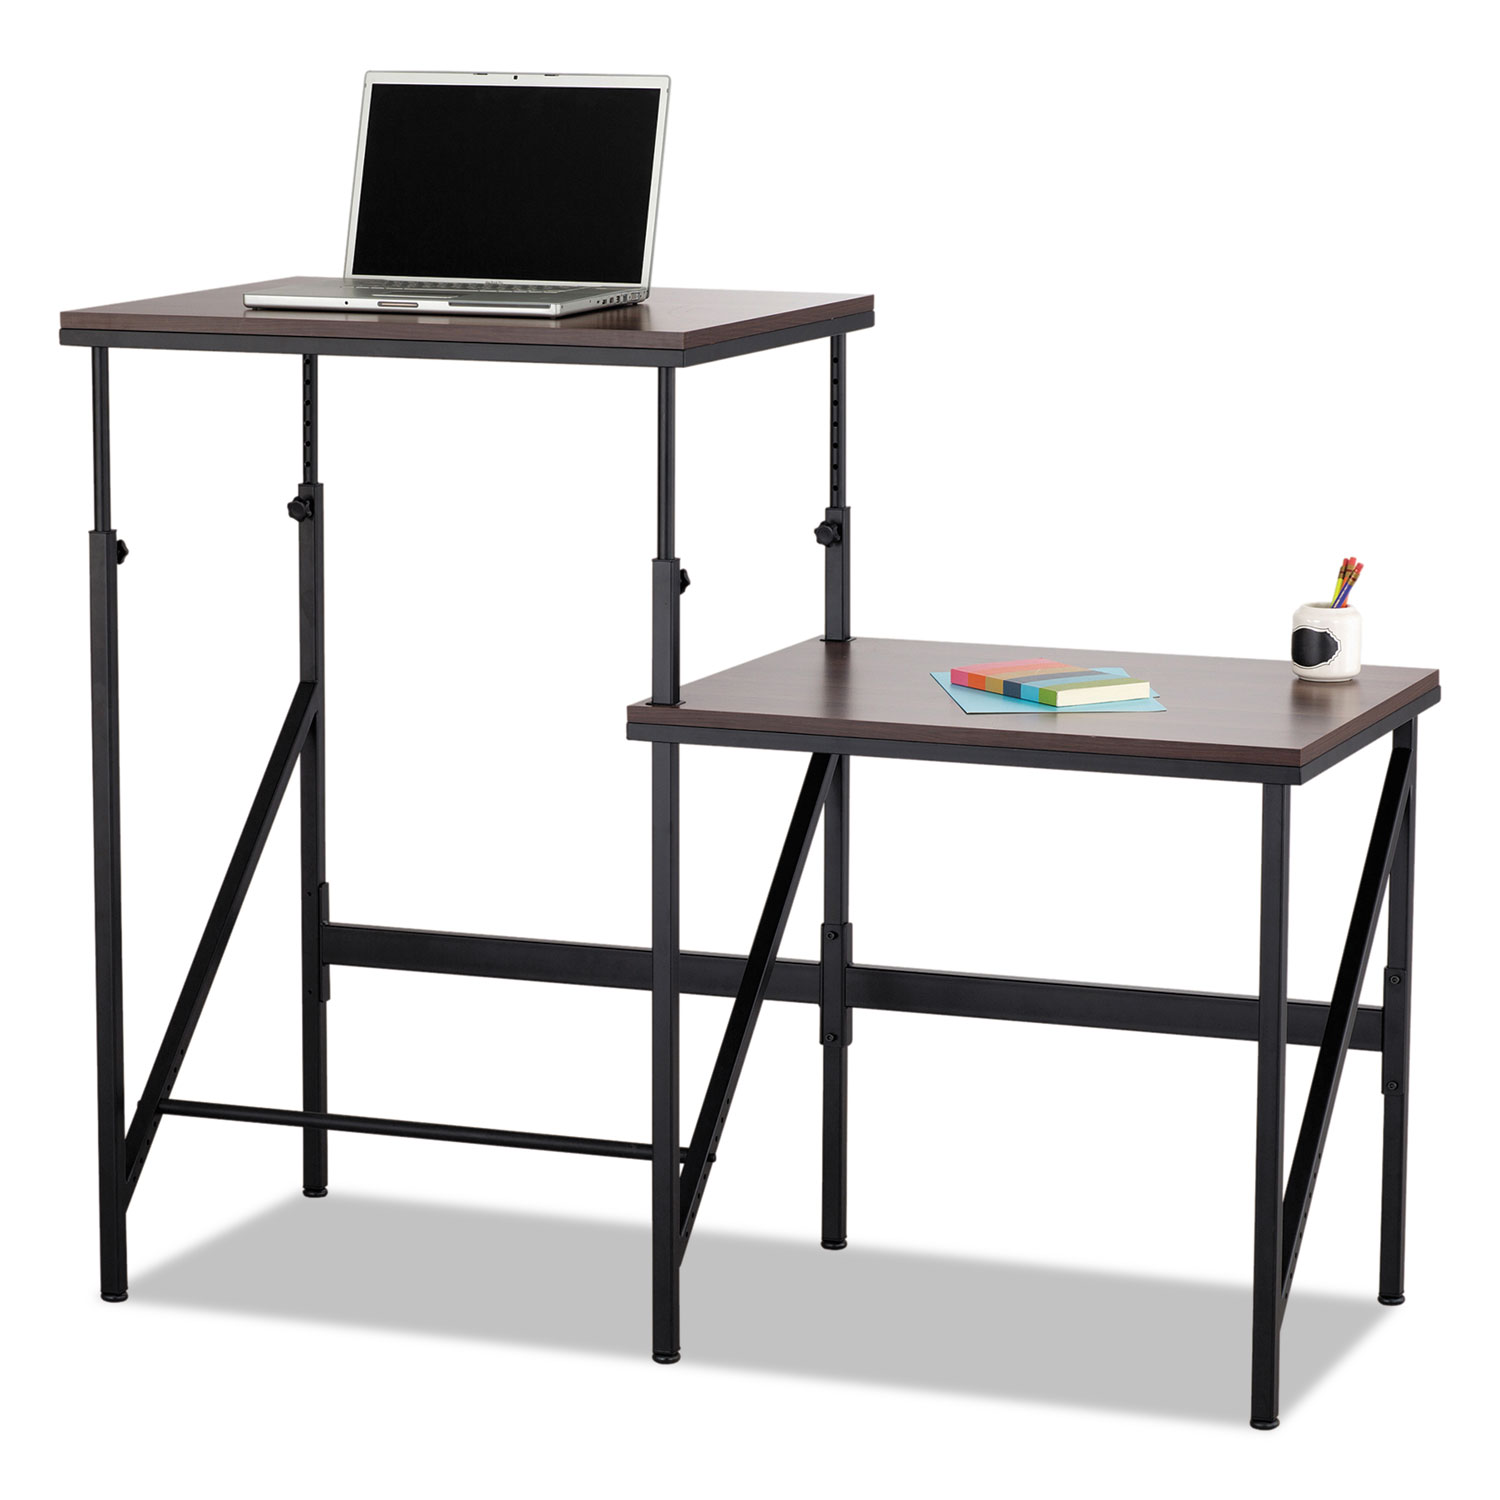  Safco 1956WL Bi-Level Standing Height Desk, 57.5w x 24d x 50h, Walnut/Black (SAF1956WL) 